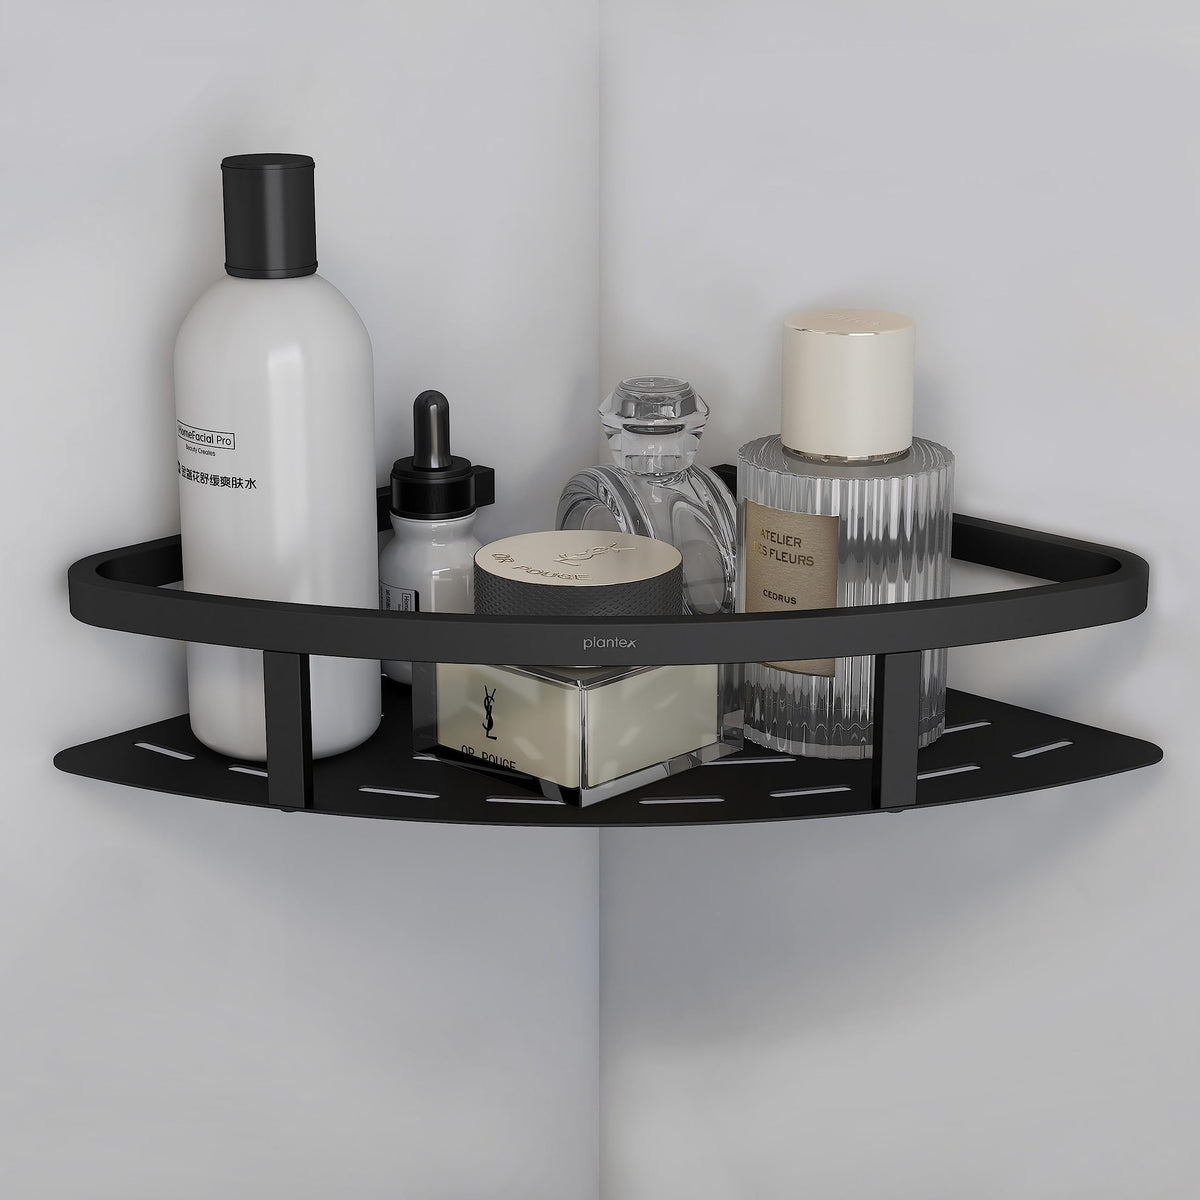 Plantex 304 Stainless Steel Corner/Bathroom Shelf/Kitchen Shelf/Wall Mount - Pack of 3 (Black,9x9 Inches)